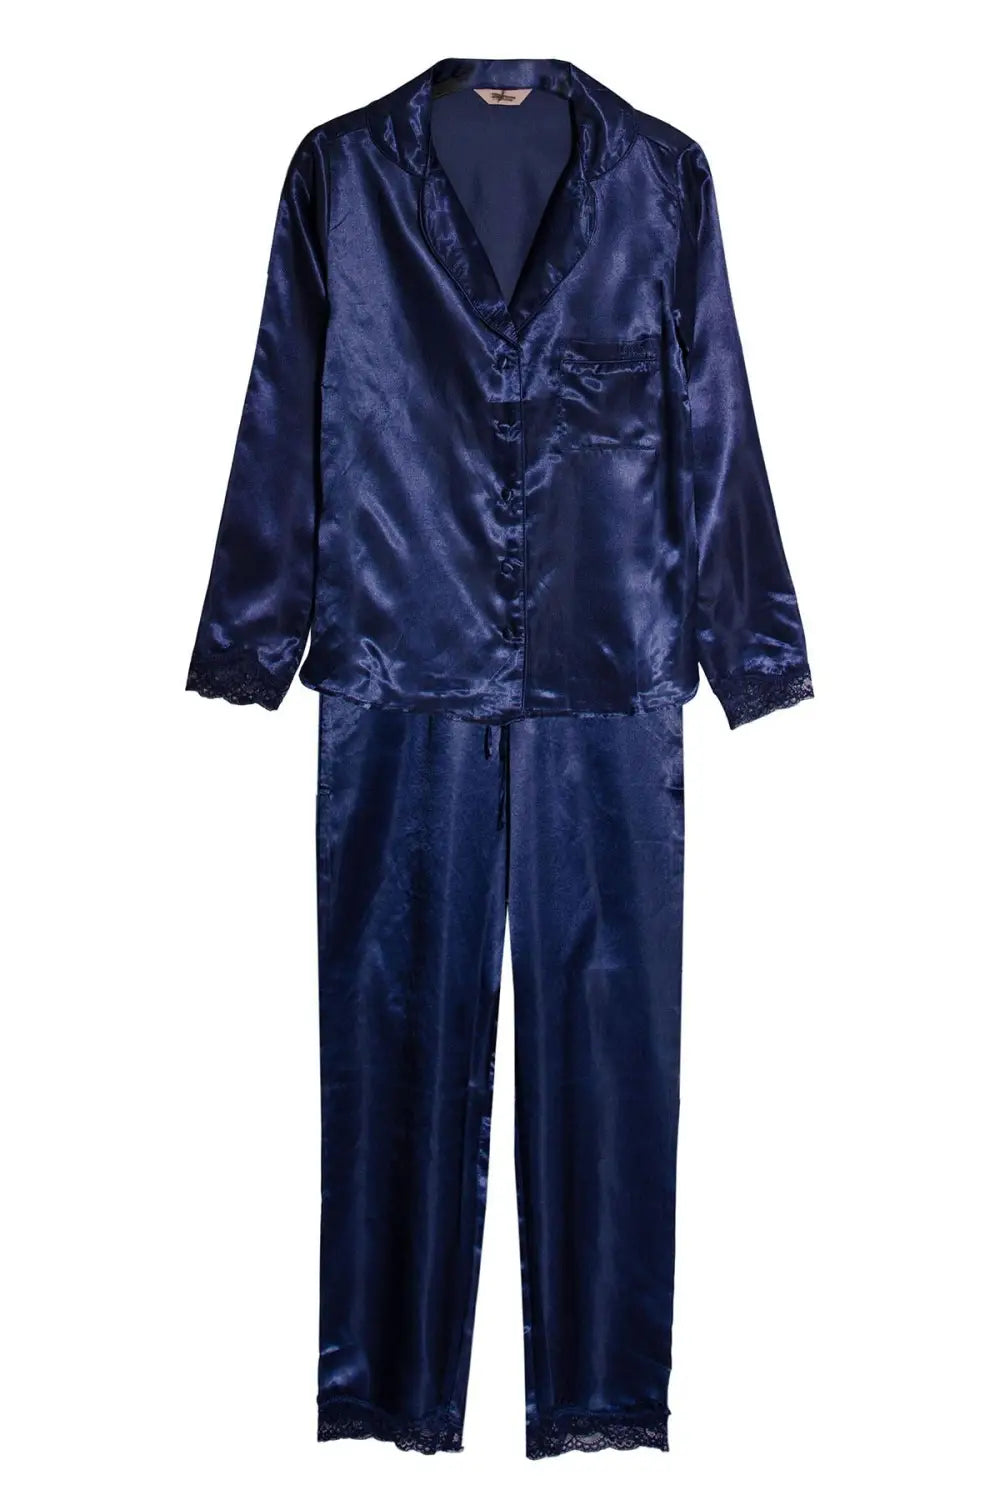 Boux Avenue Satin Pyjama Set